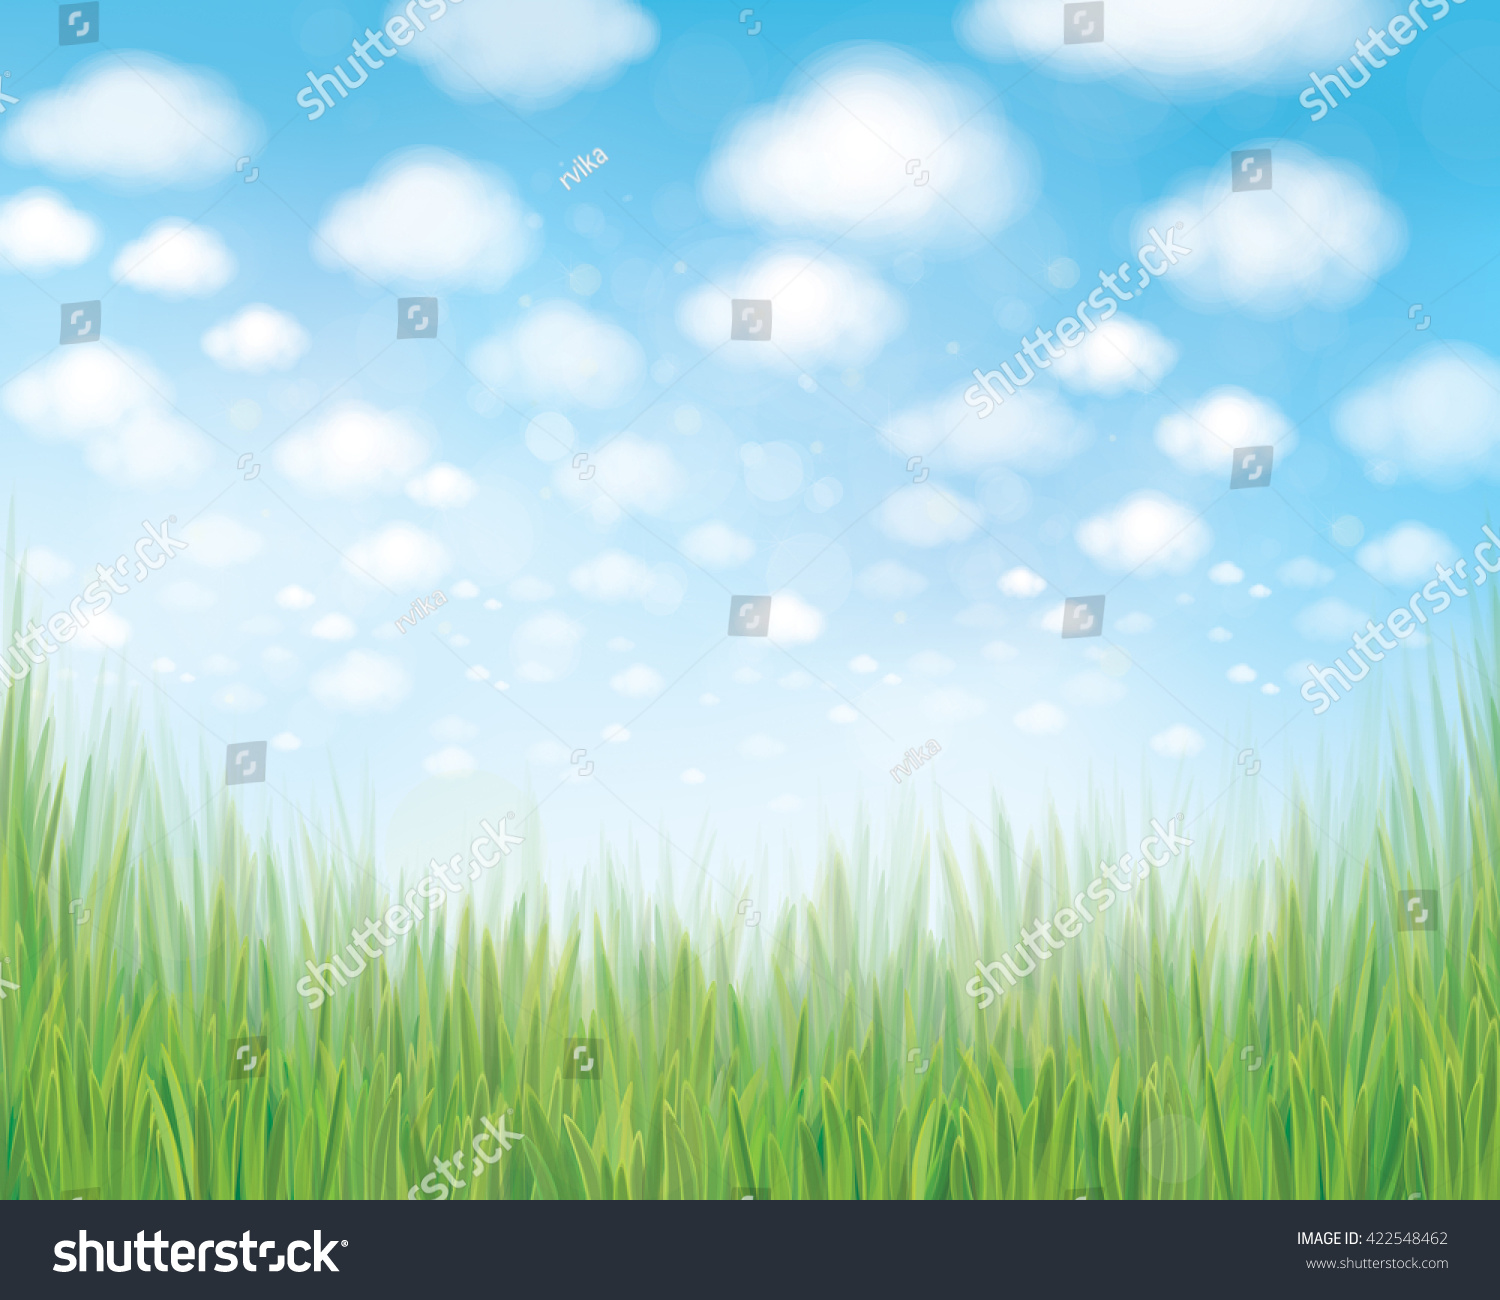 Vector Green Grass Border On Blue Stock Vector 422548462 - Shutterstock